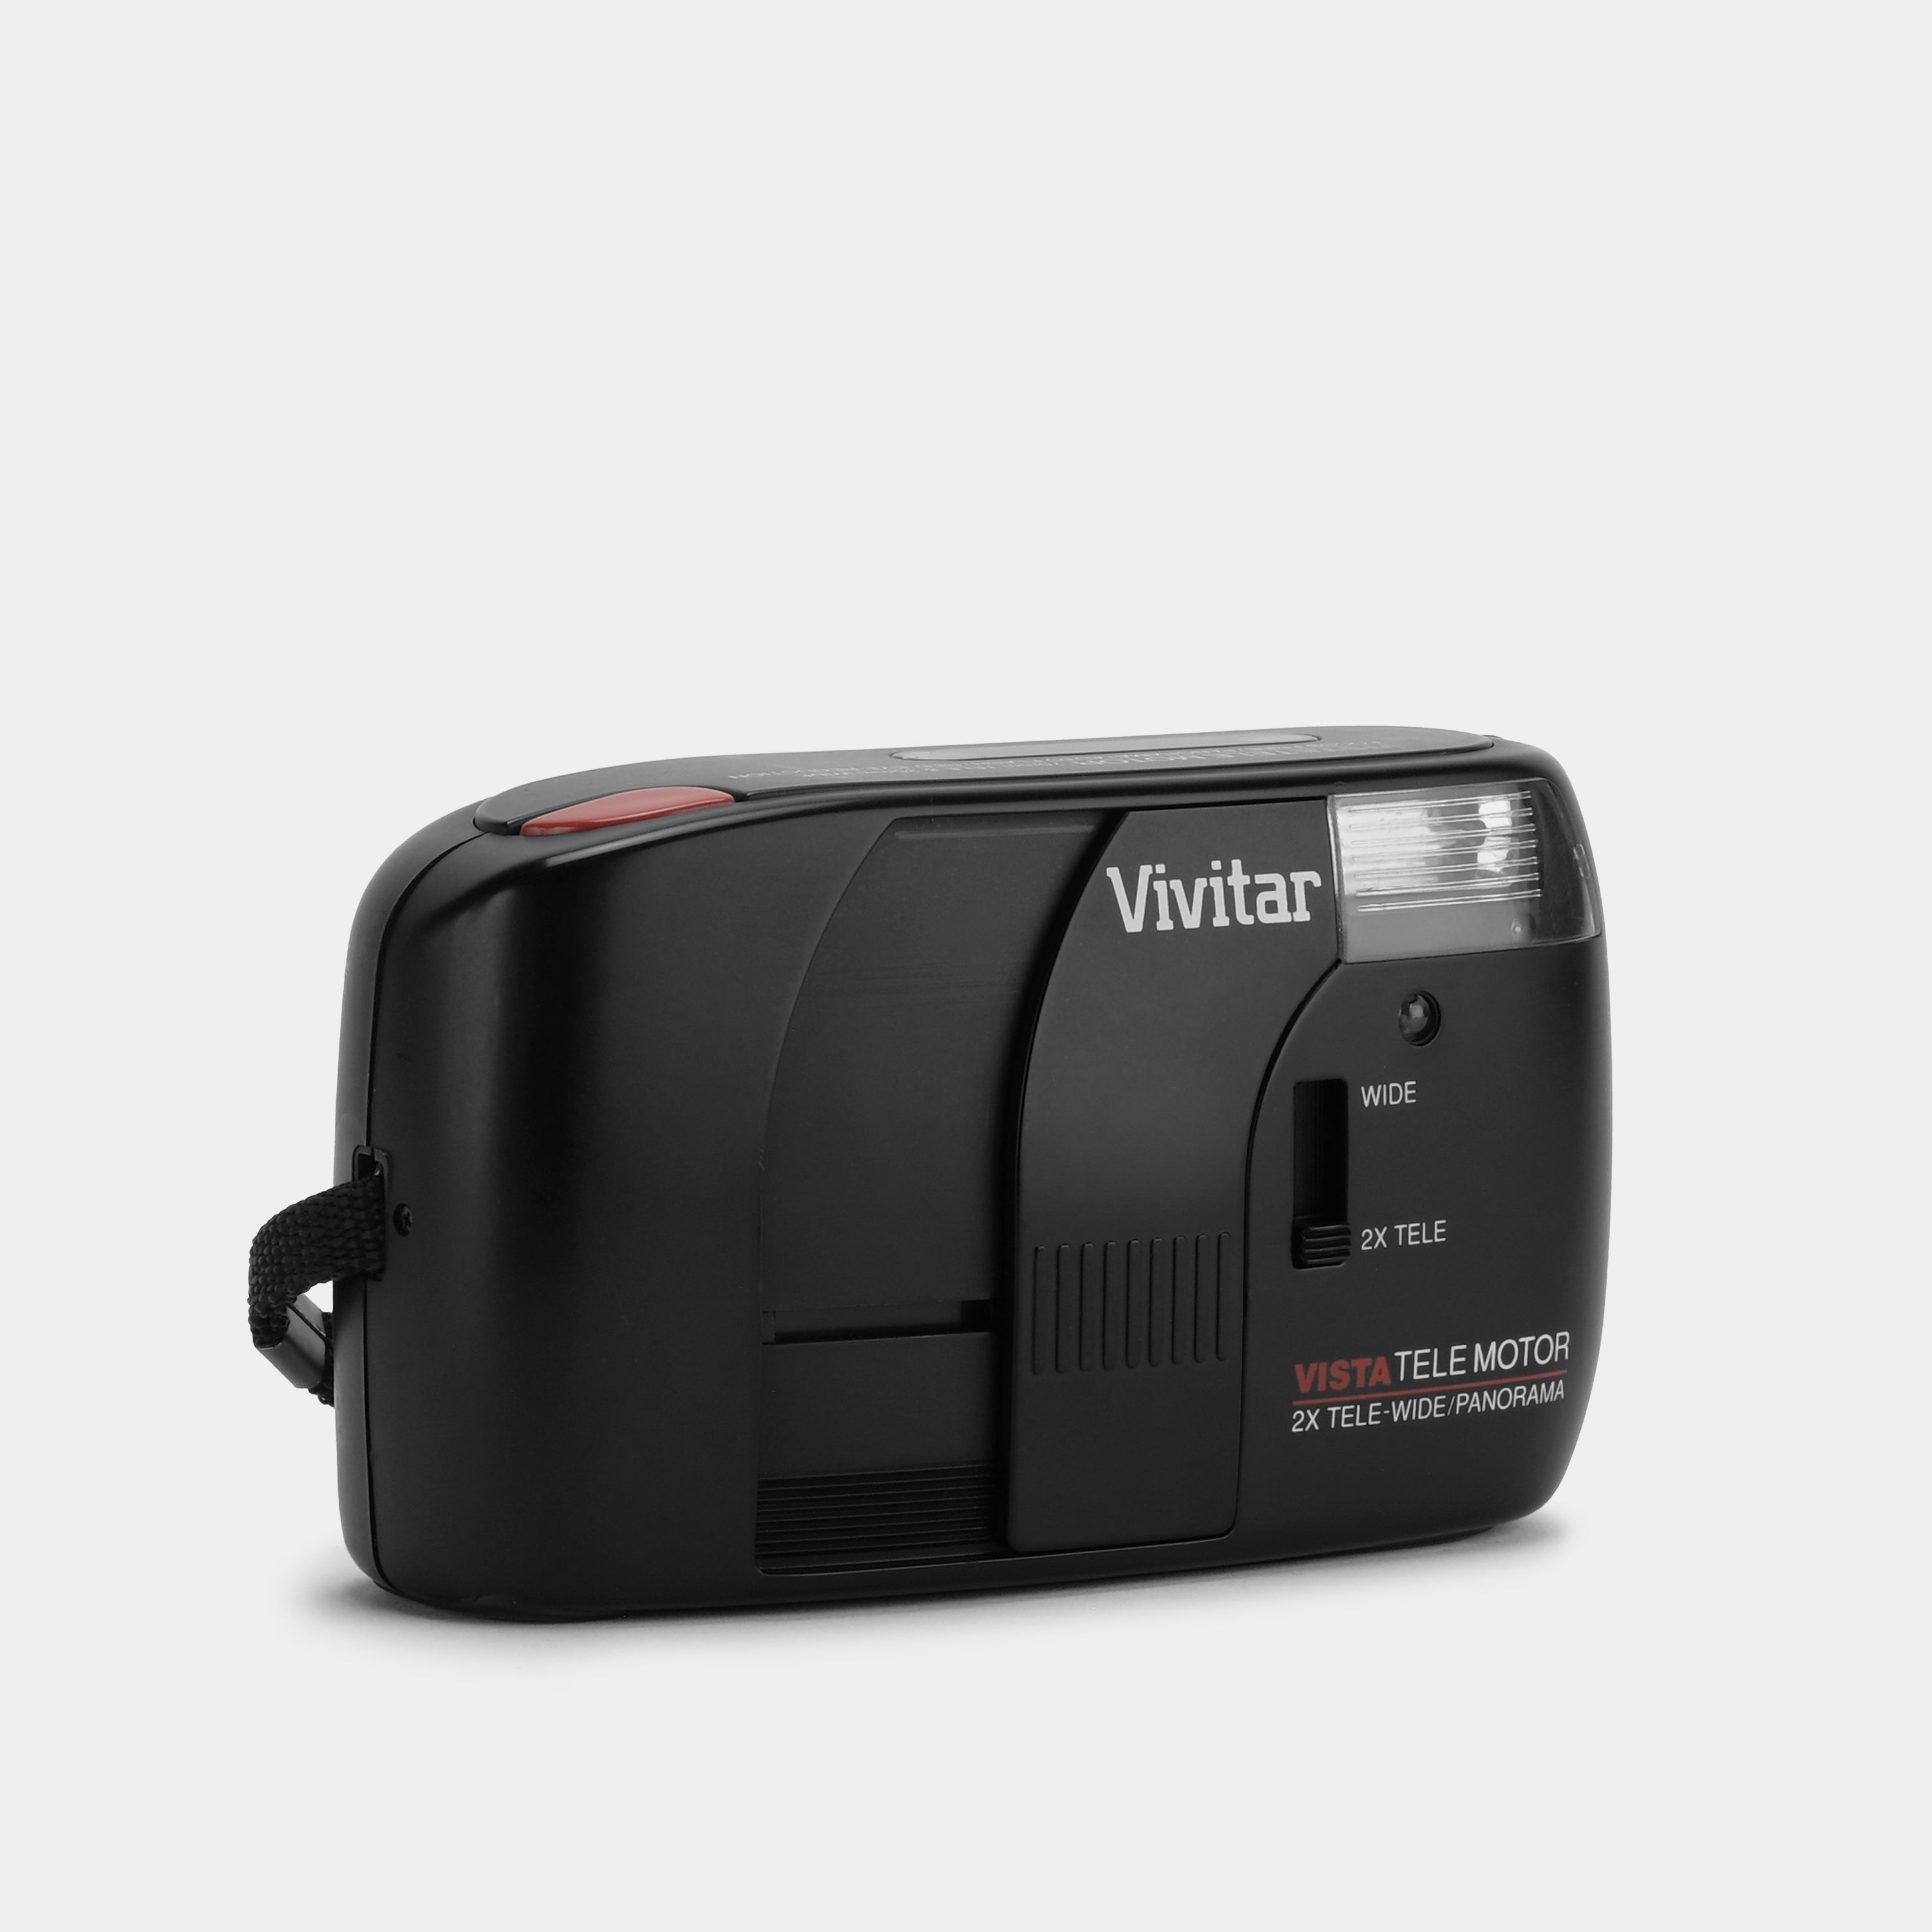 Vivitar Tele Motor 35mm Point and Shoot Film Camera